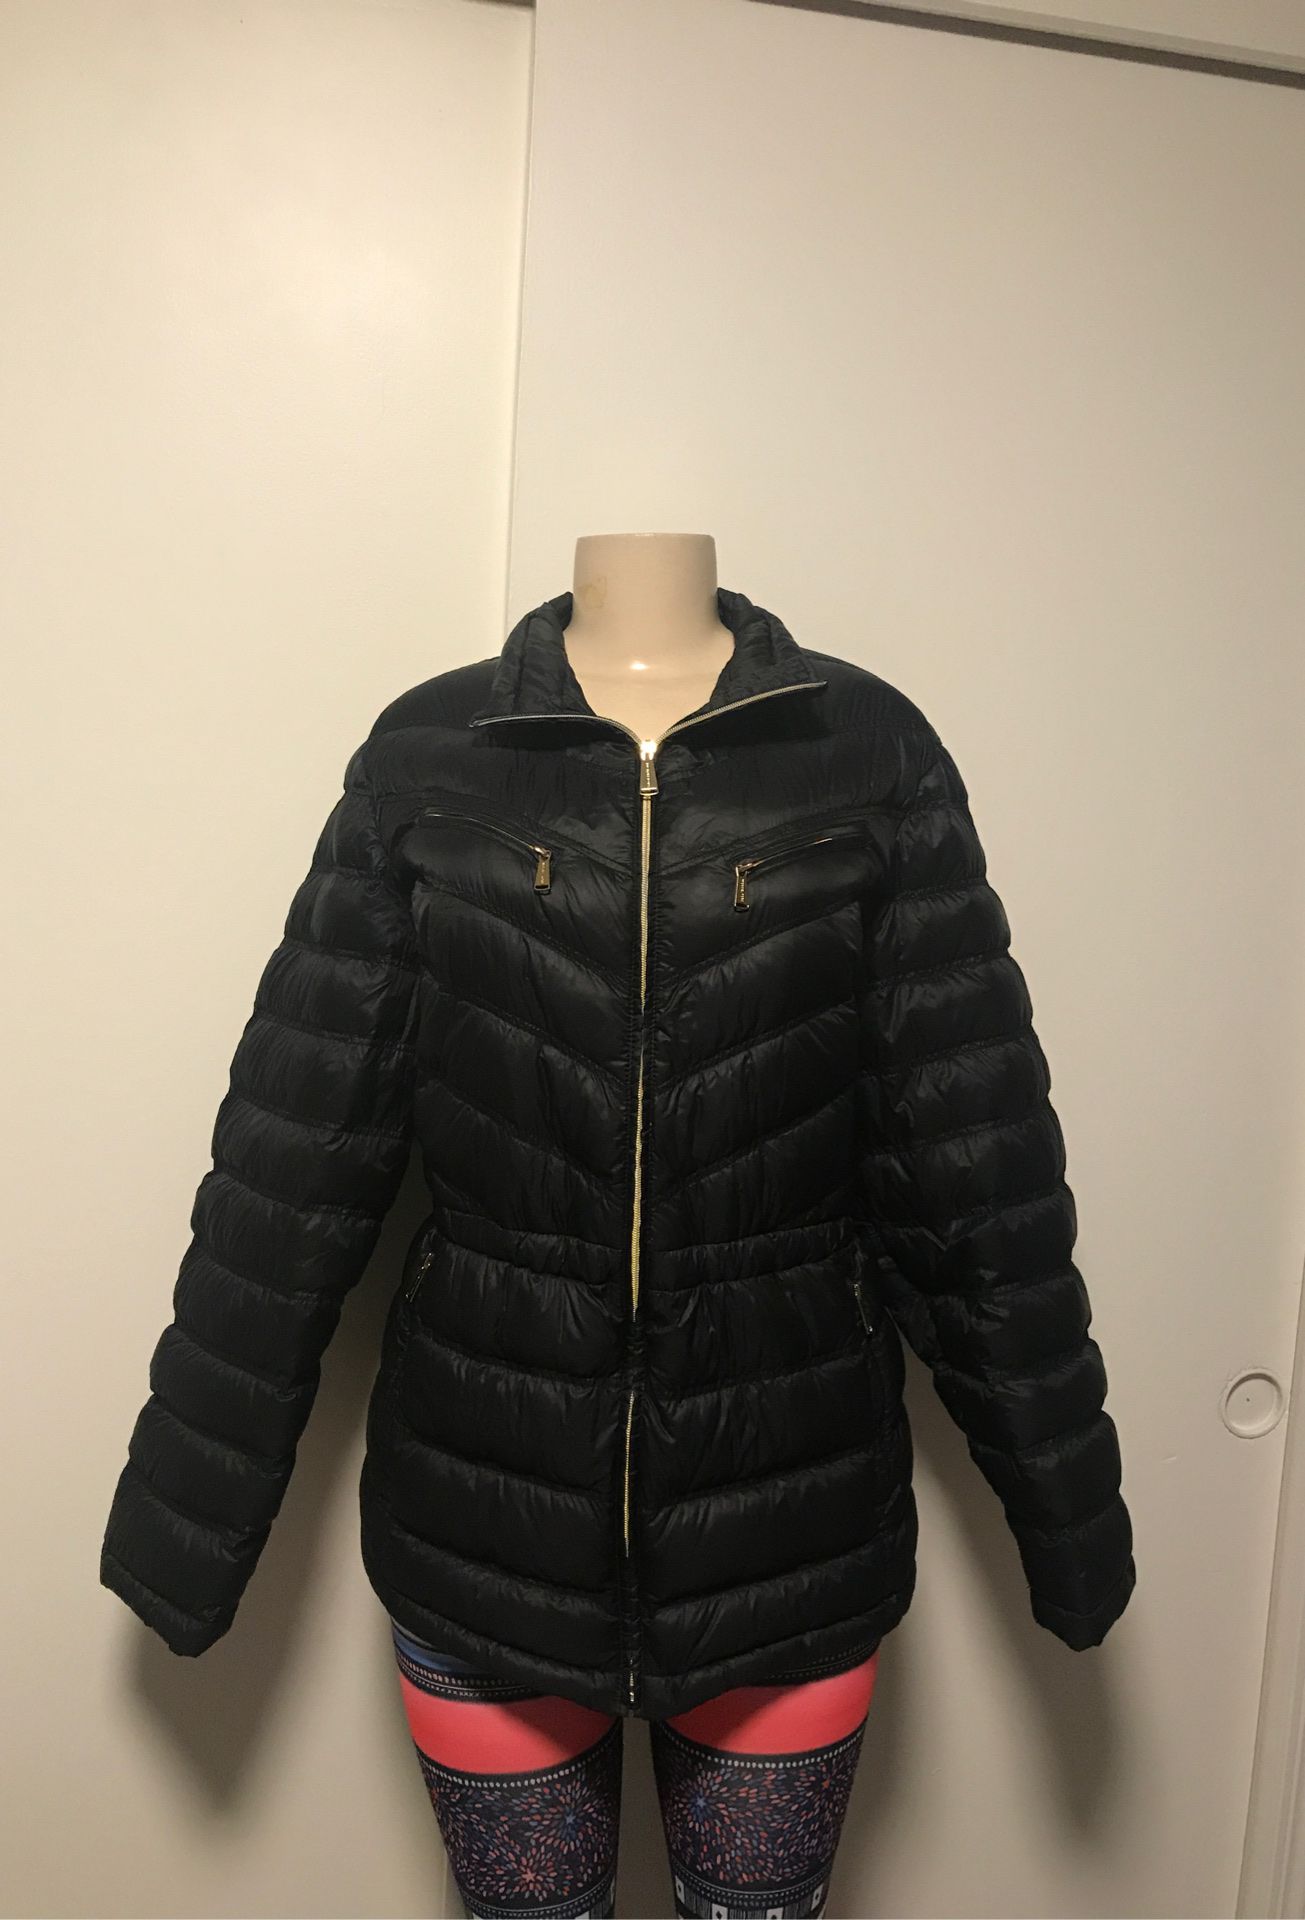 Michael Kors jacket Size XL $10 Firm Price